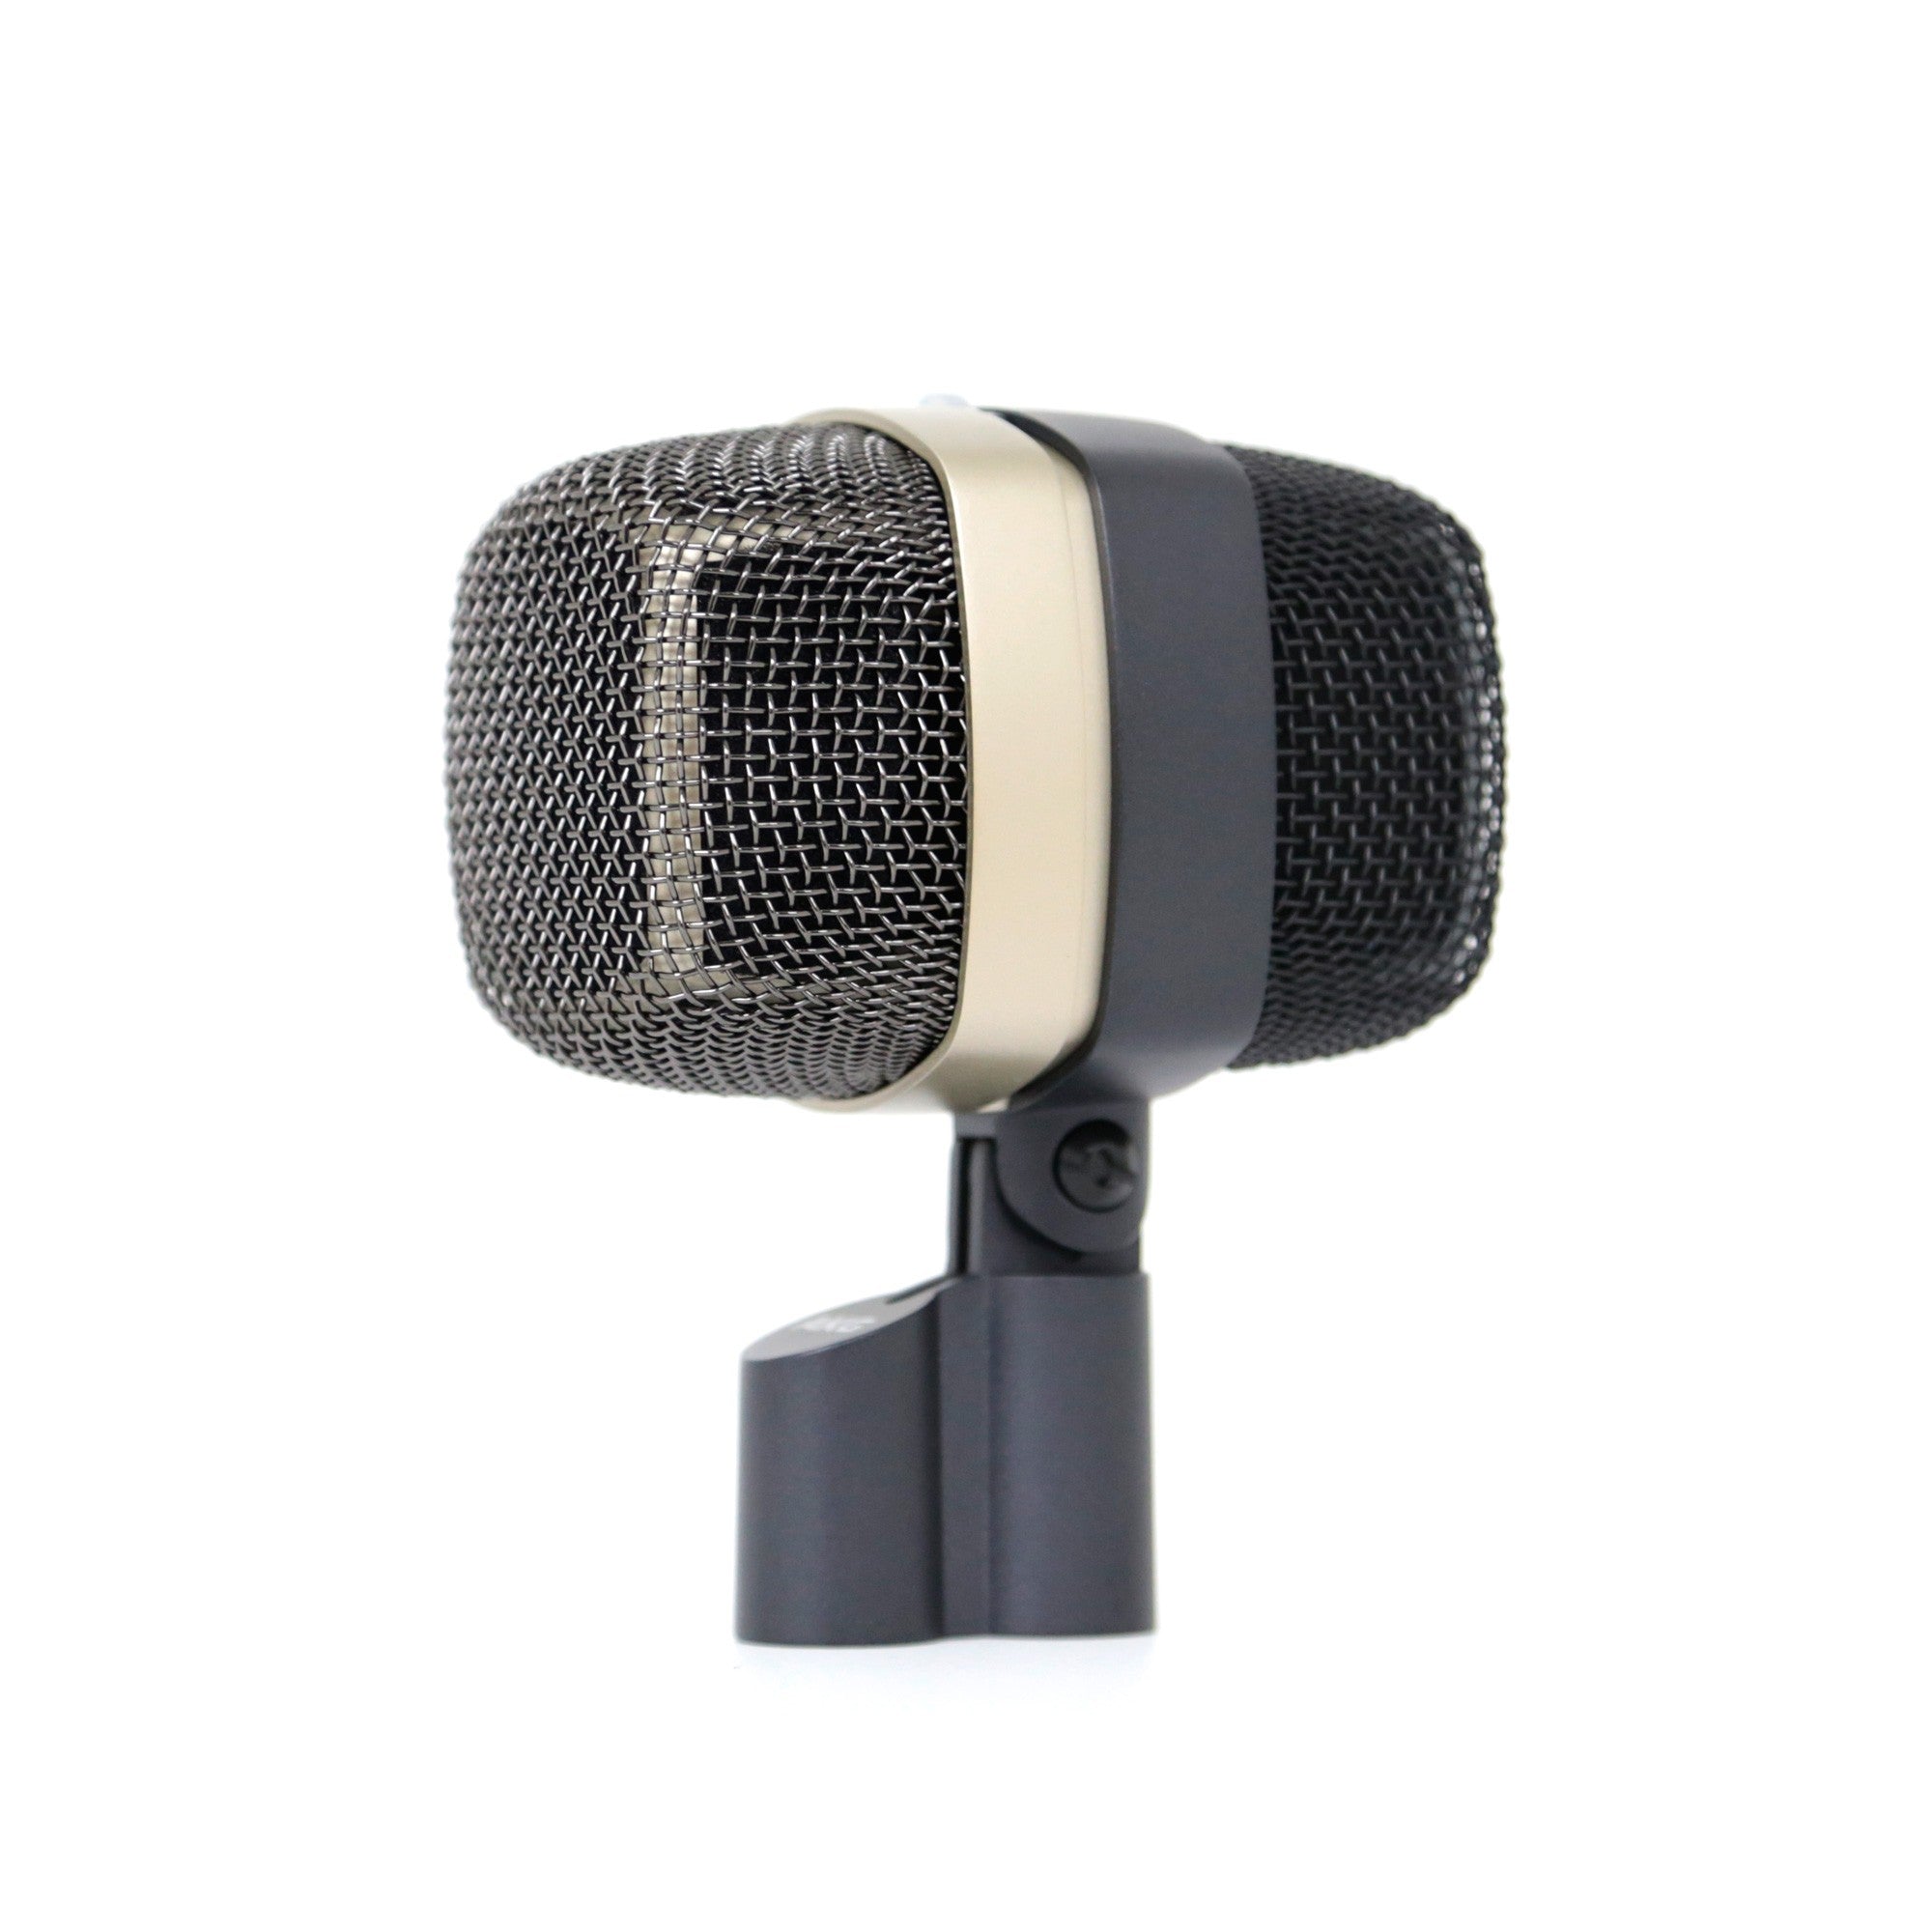 AKG D12 VR Dynamic Microphone